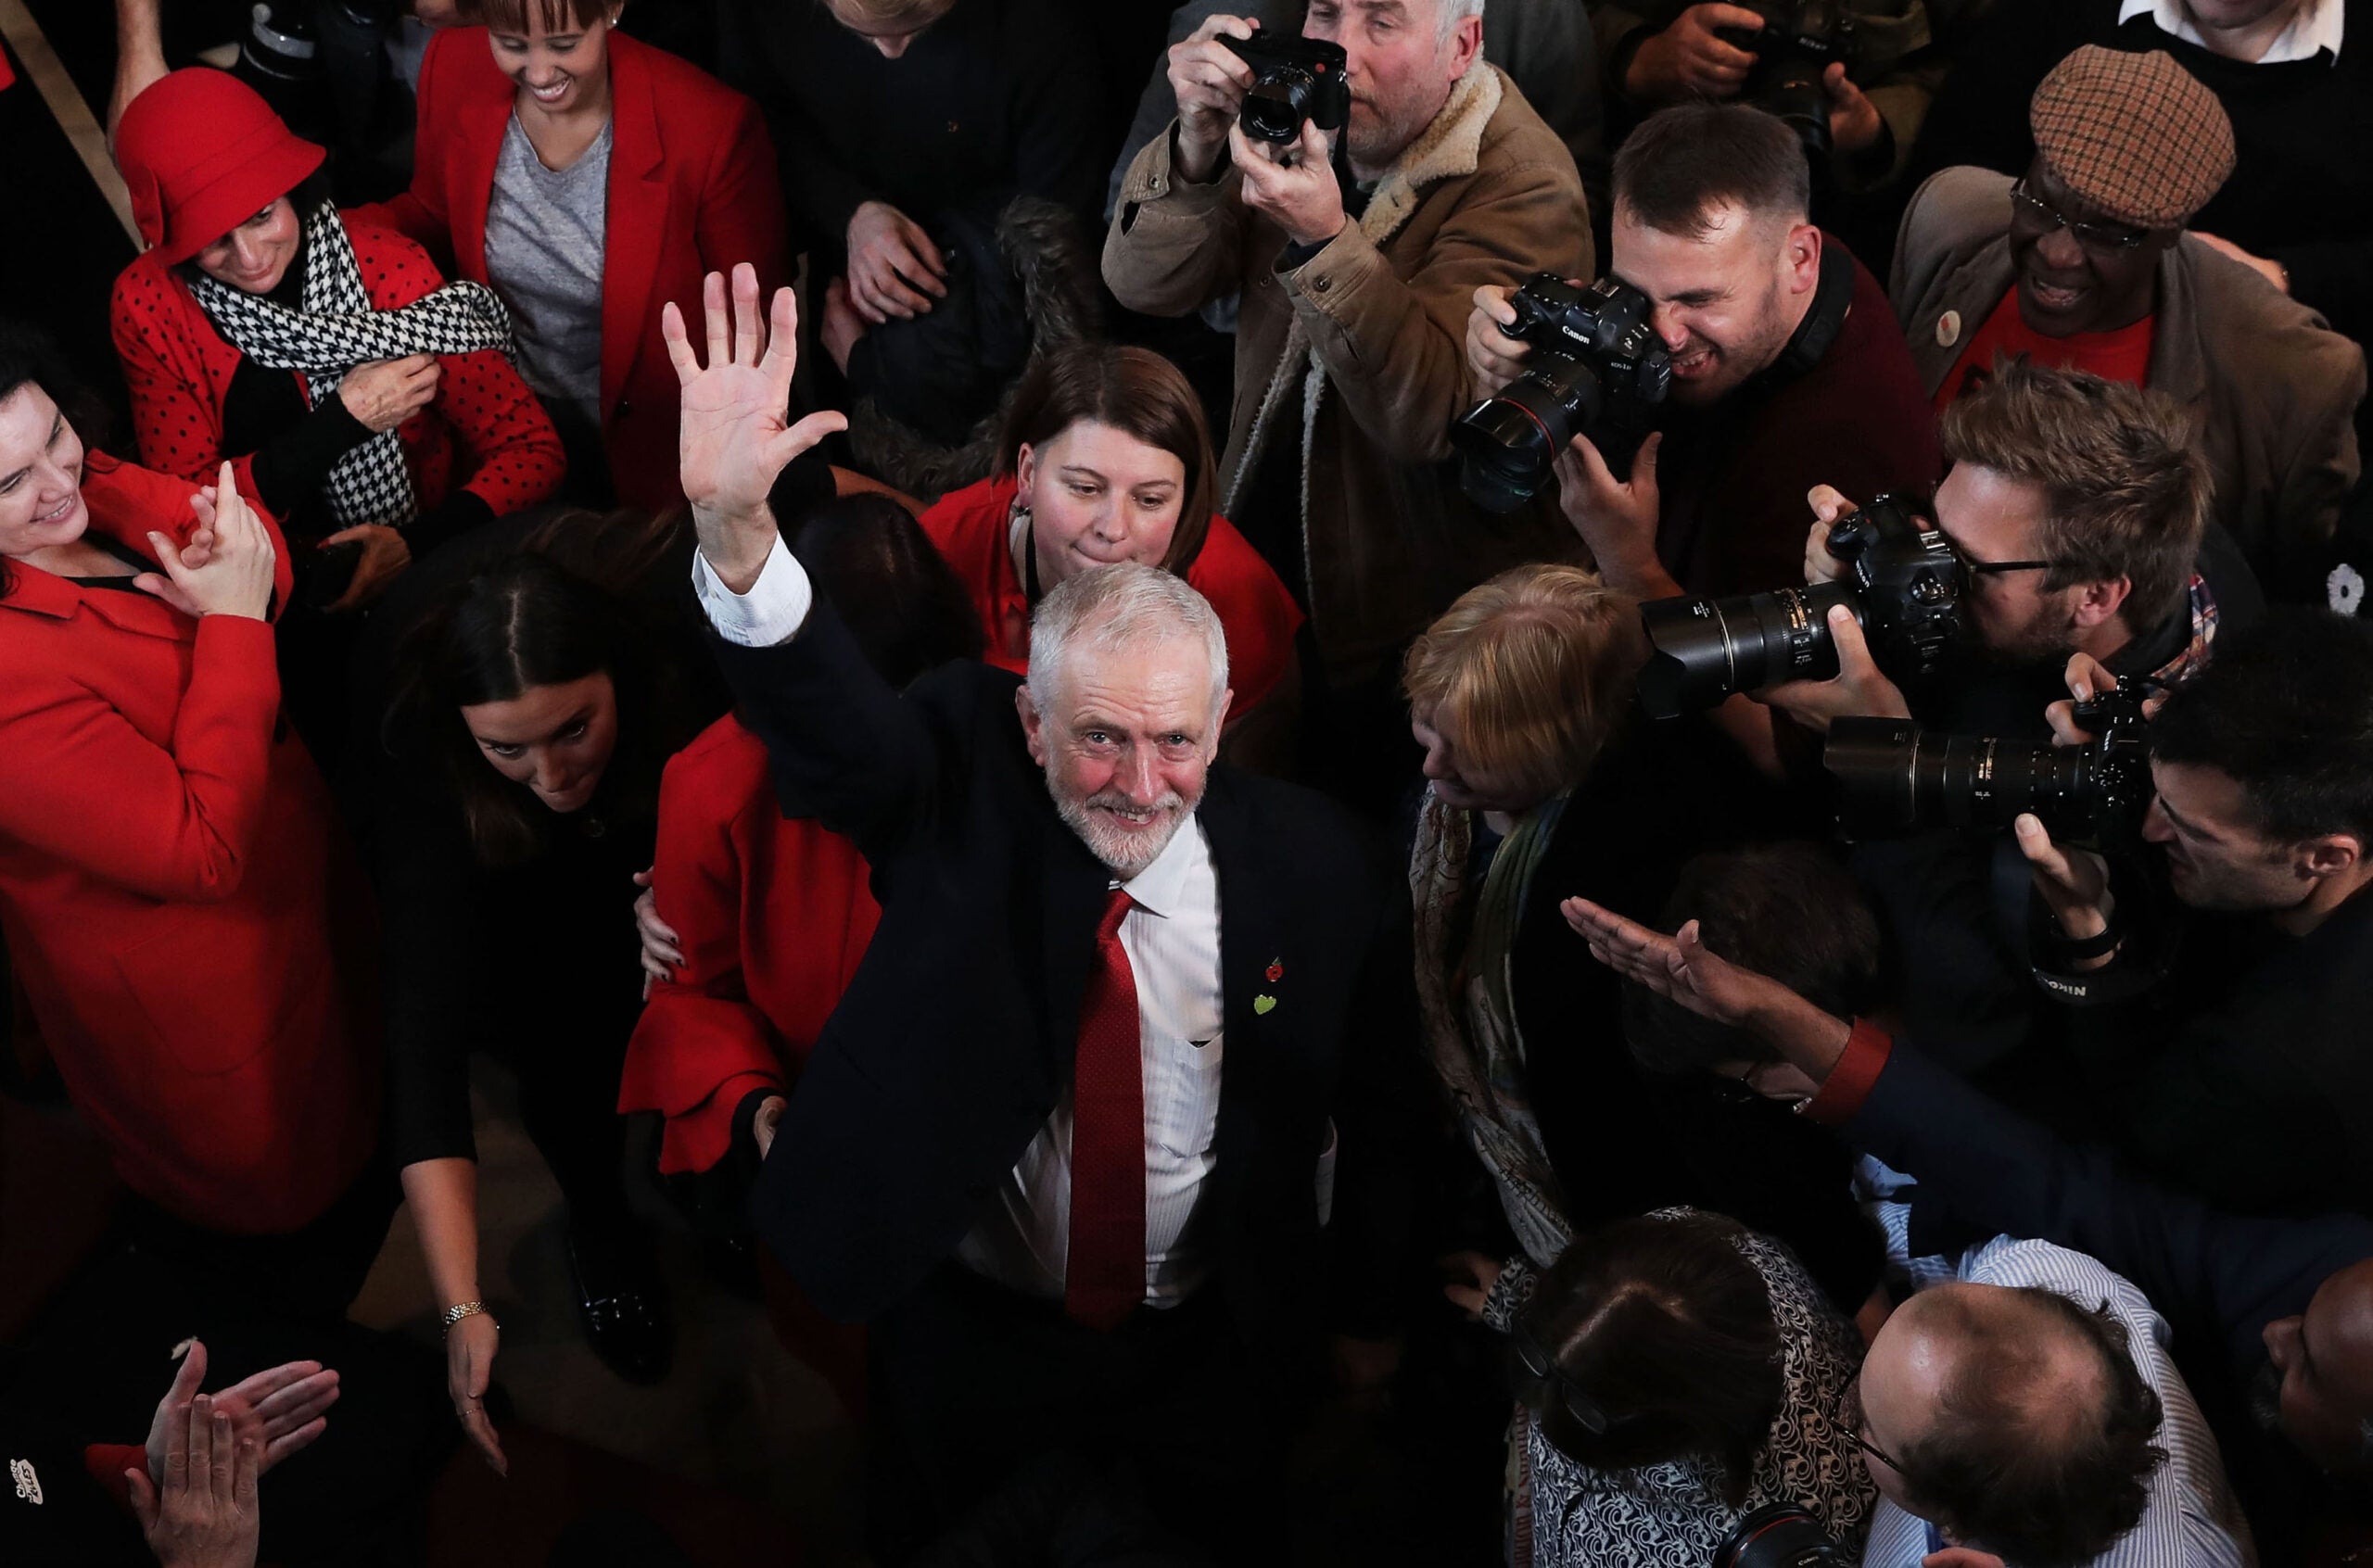 Labour’s loss was bigger than Corbyn – now his critics must rebuild